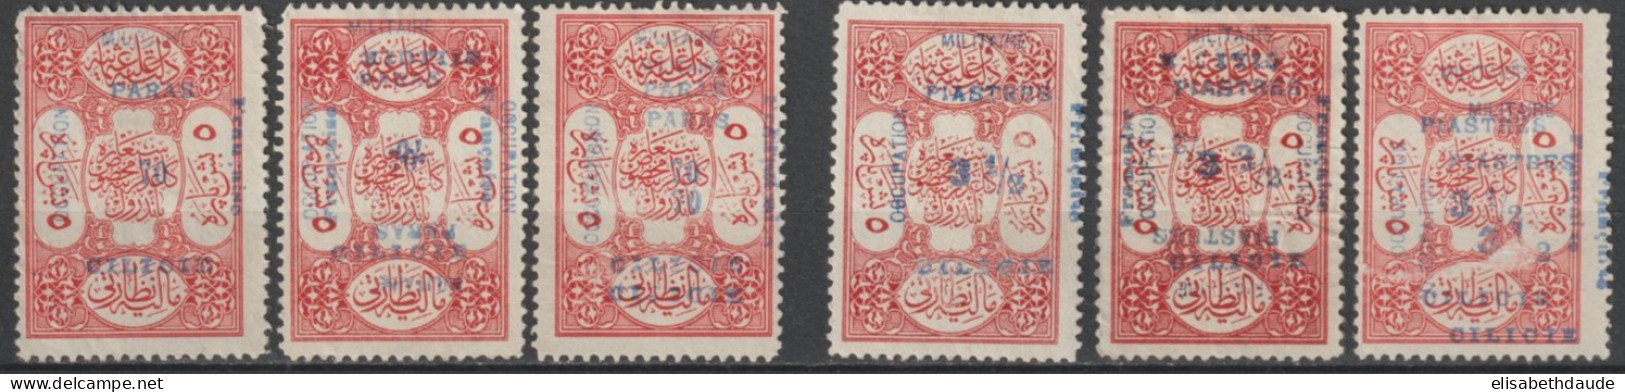 CILICIE - 1920 - YVERT N°78+78e+78d+79+79g+79h VARIETES DOUBLE SURCHARGE / RENVERSEE ... (*) SANS GOMME - COTE = 300 EUR - Unused Stamps